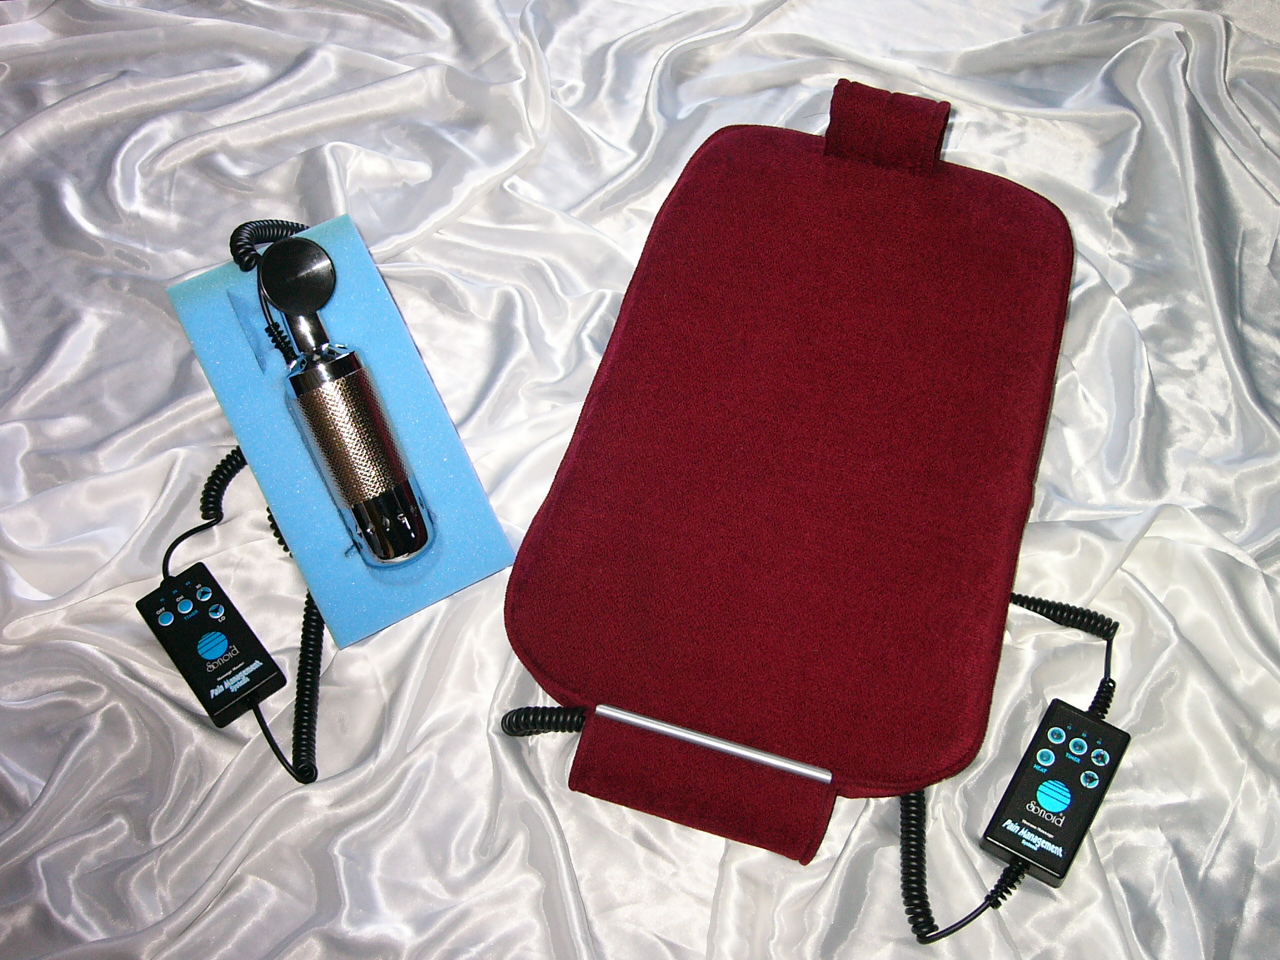 ARAPAL Portable Health Unit